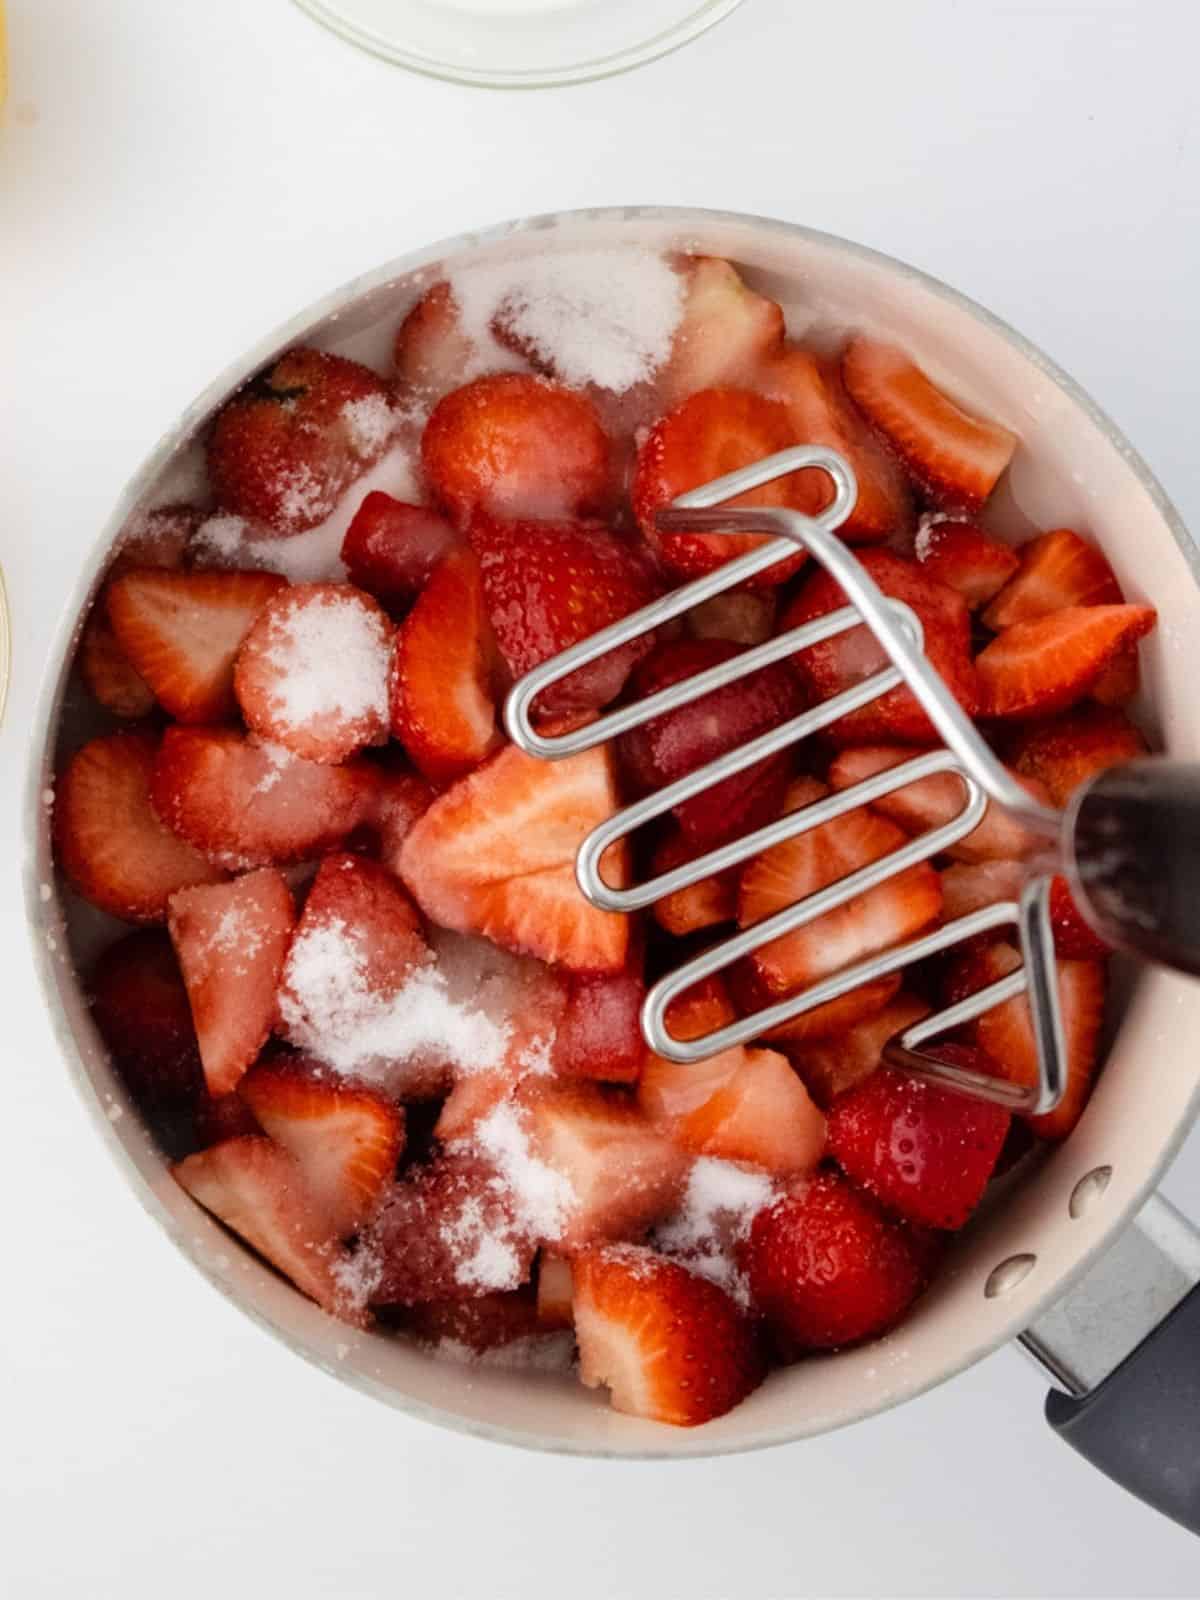 mash strawberries with potato masher.